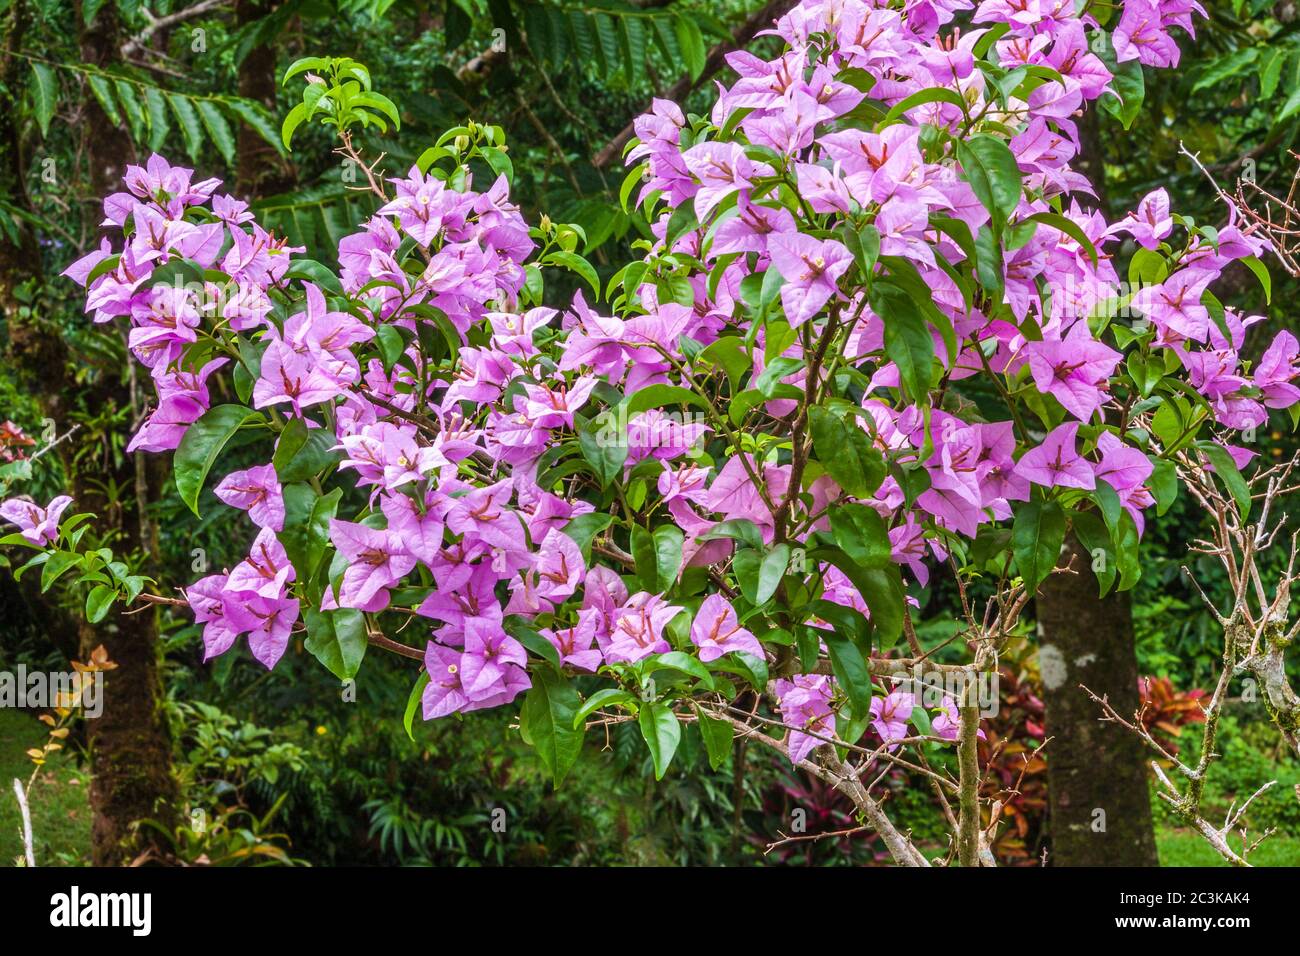 Flowering Bougainvillea bush, Bougainvillea spectabilis, in the tropical gardens at Arenal Observatory Lodge near Fortuna, Costa Rica. Stock Photo